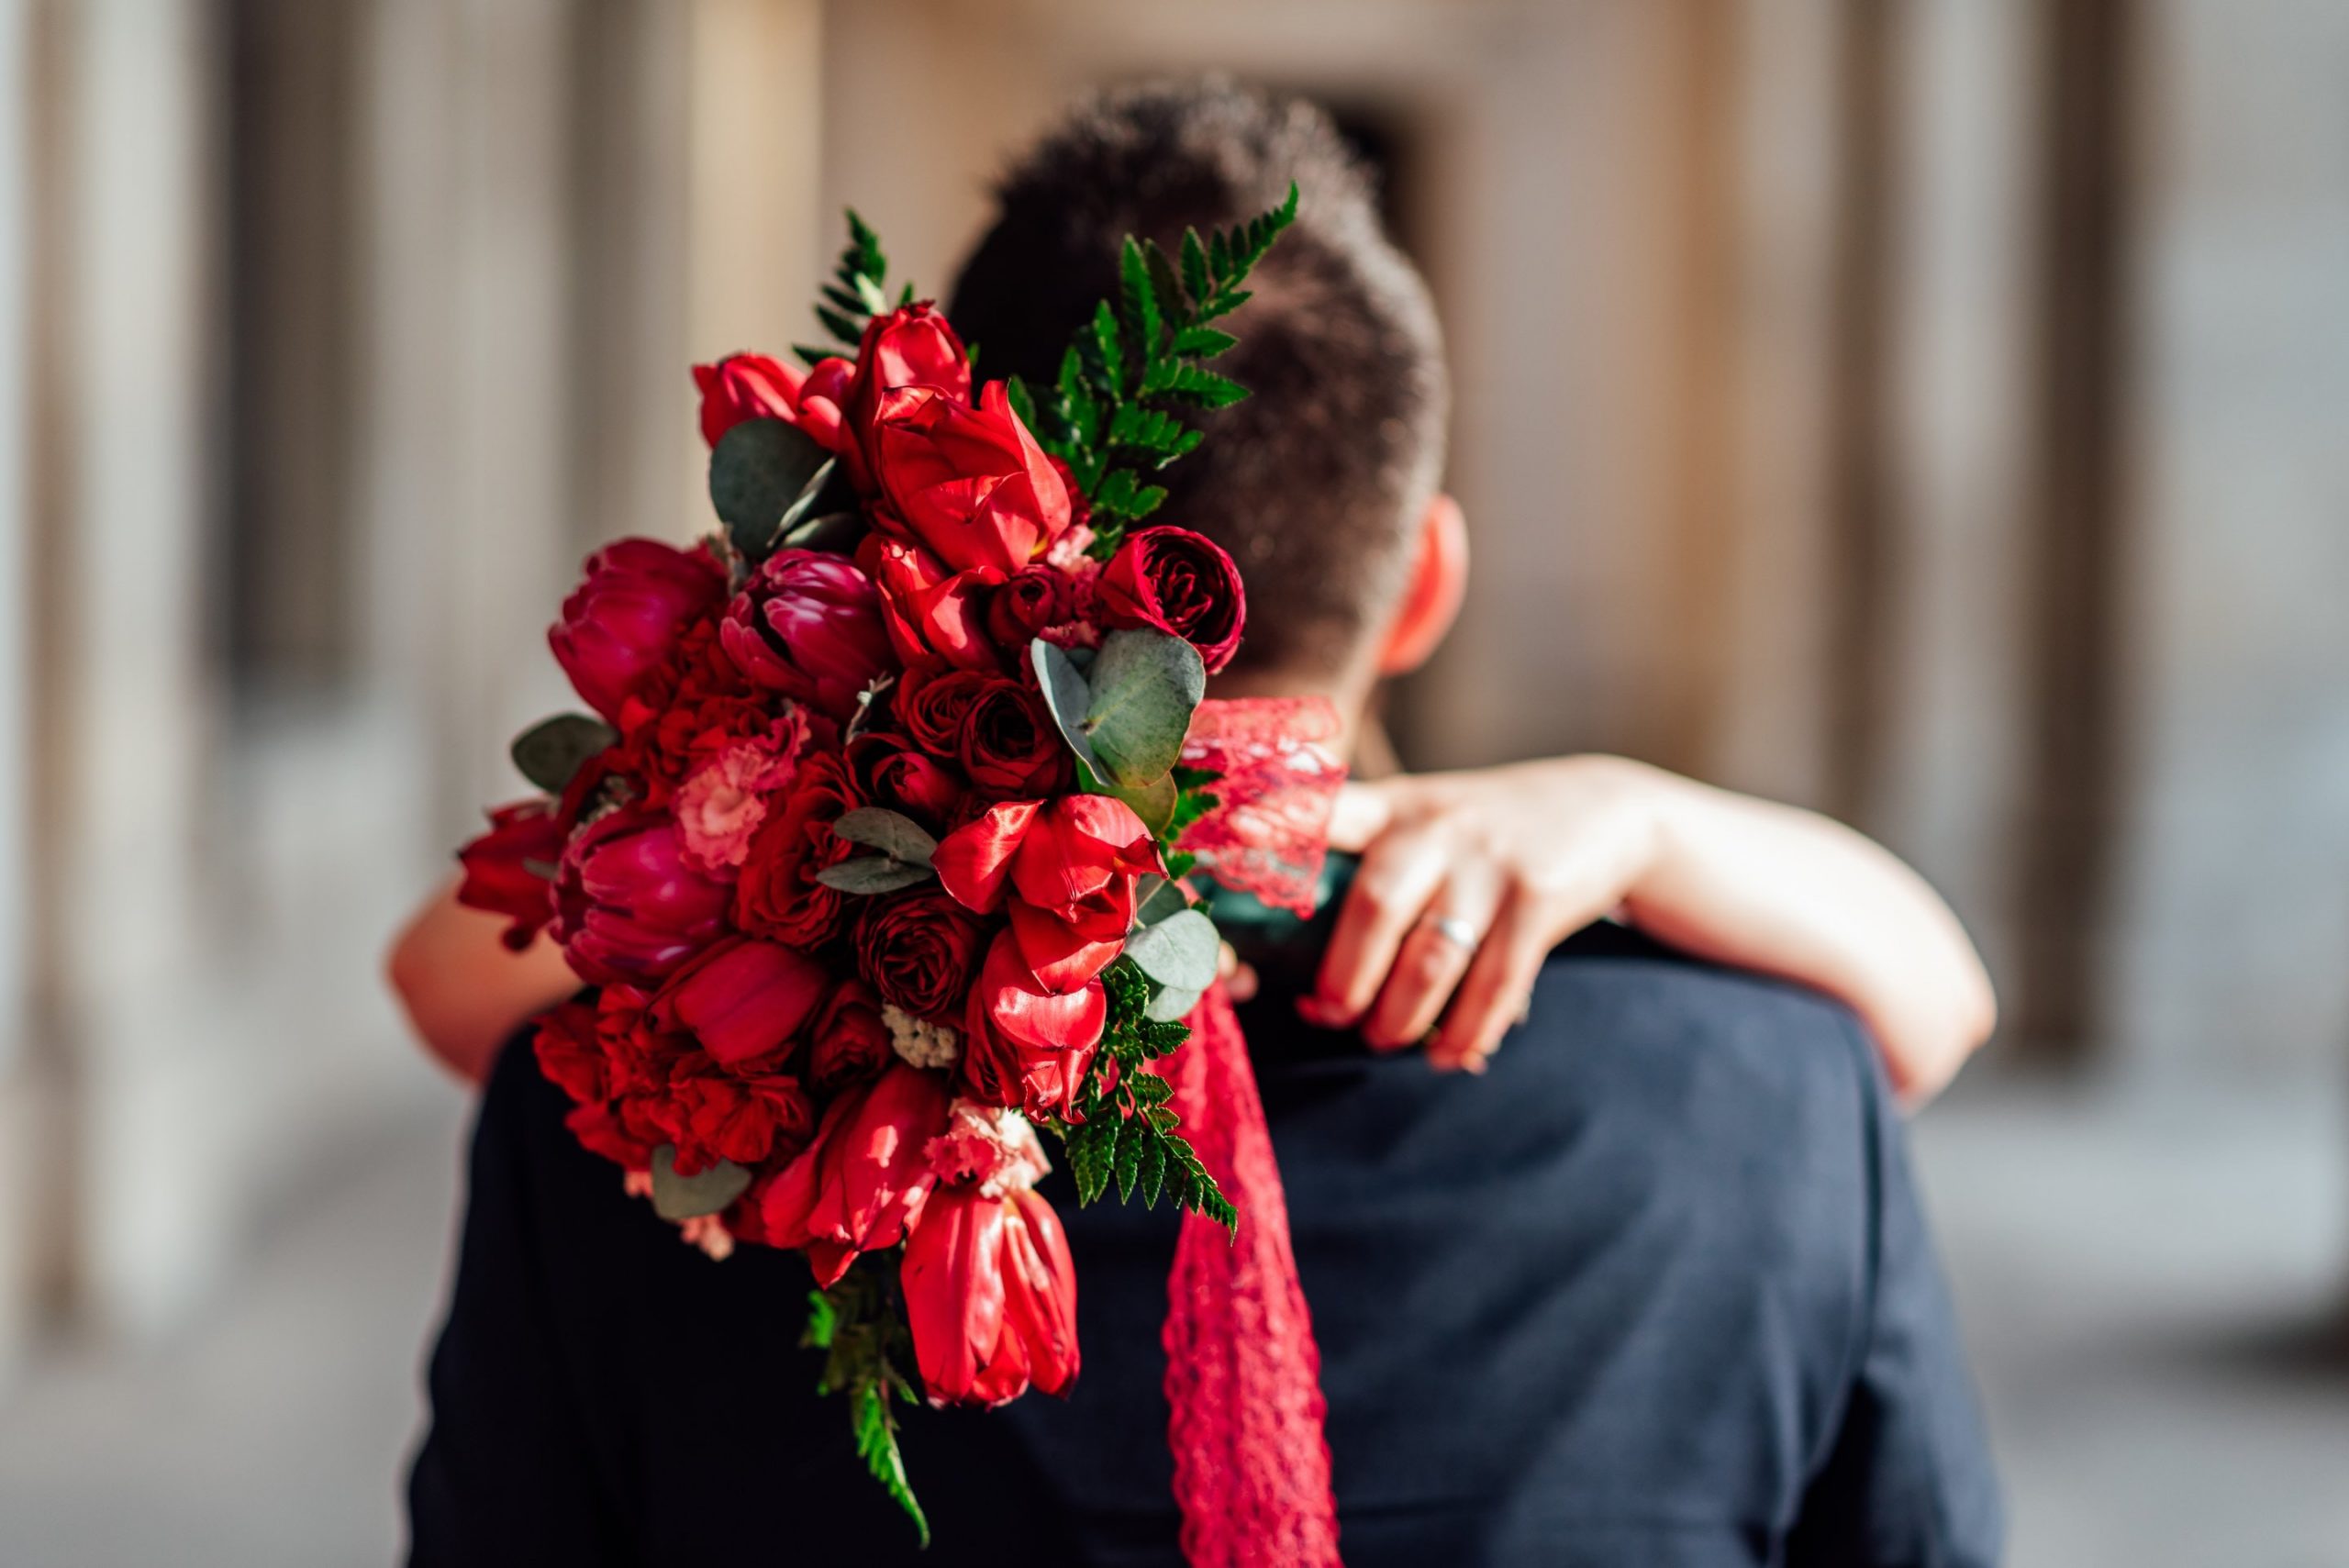 blog-moneytrans-valentin-day-couple-bouquet-roses